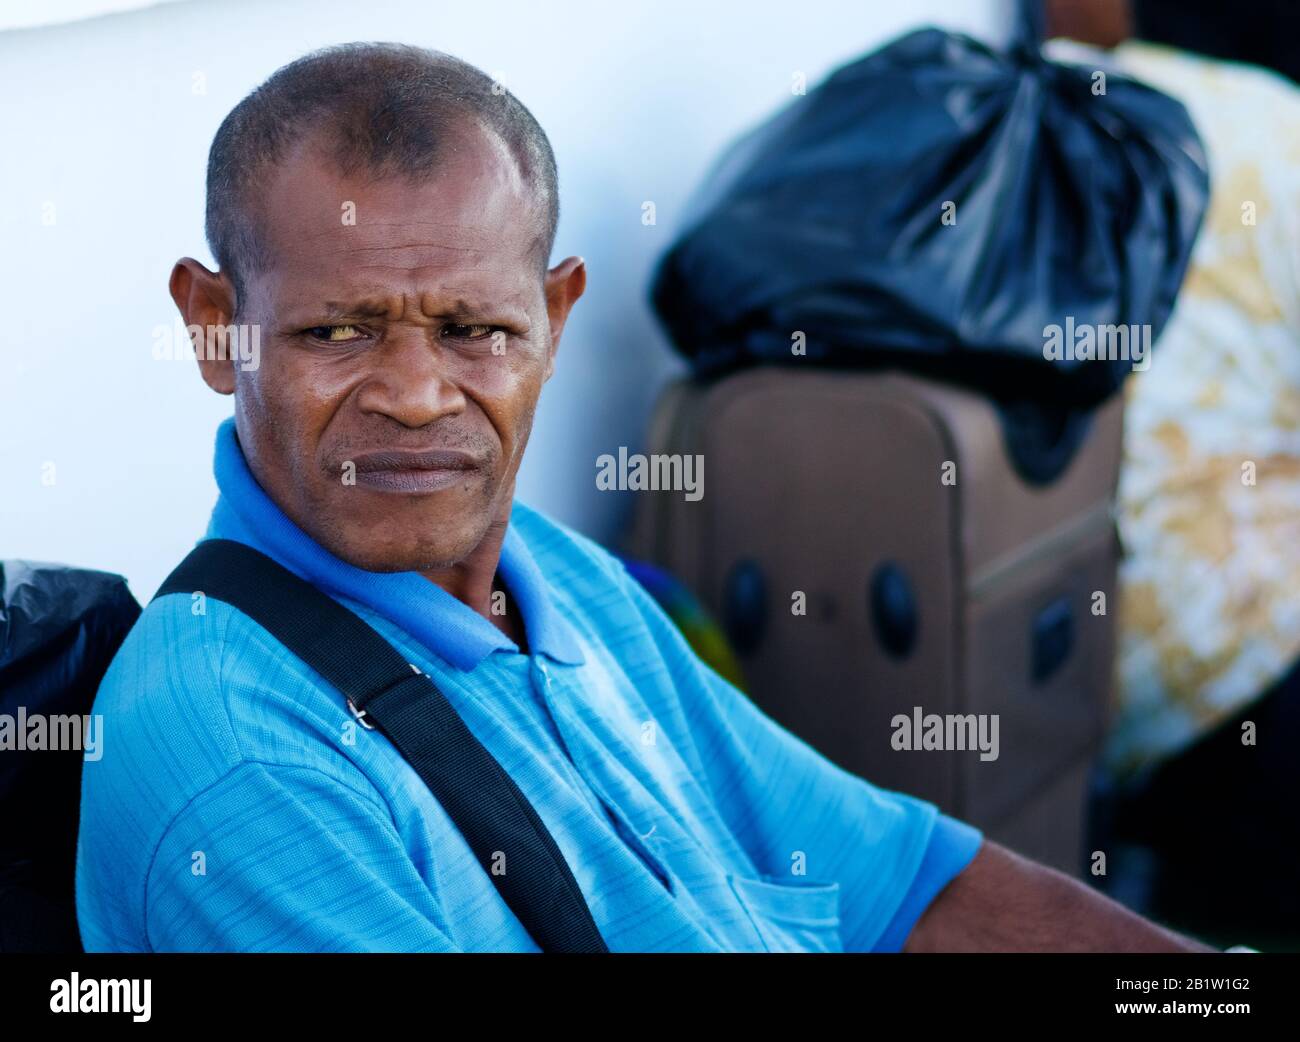 Papua-Mann, Bootspassagier für Raja Ampat Island - Occidental Papua, Indonesien Stockfoto